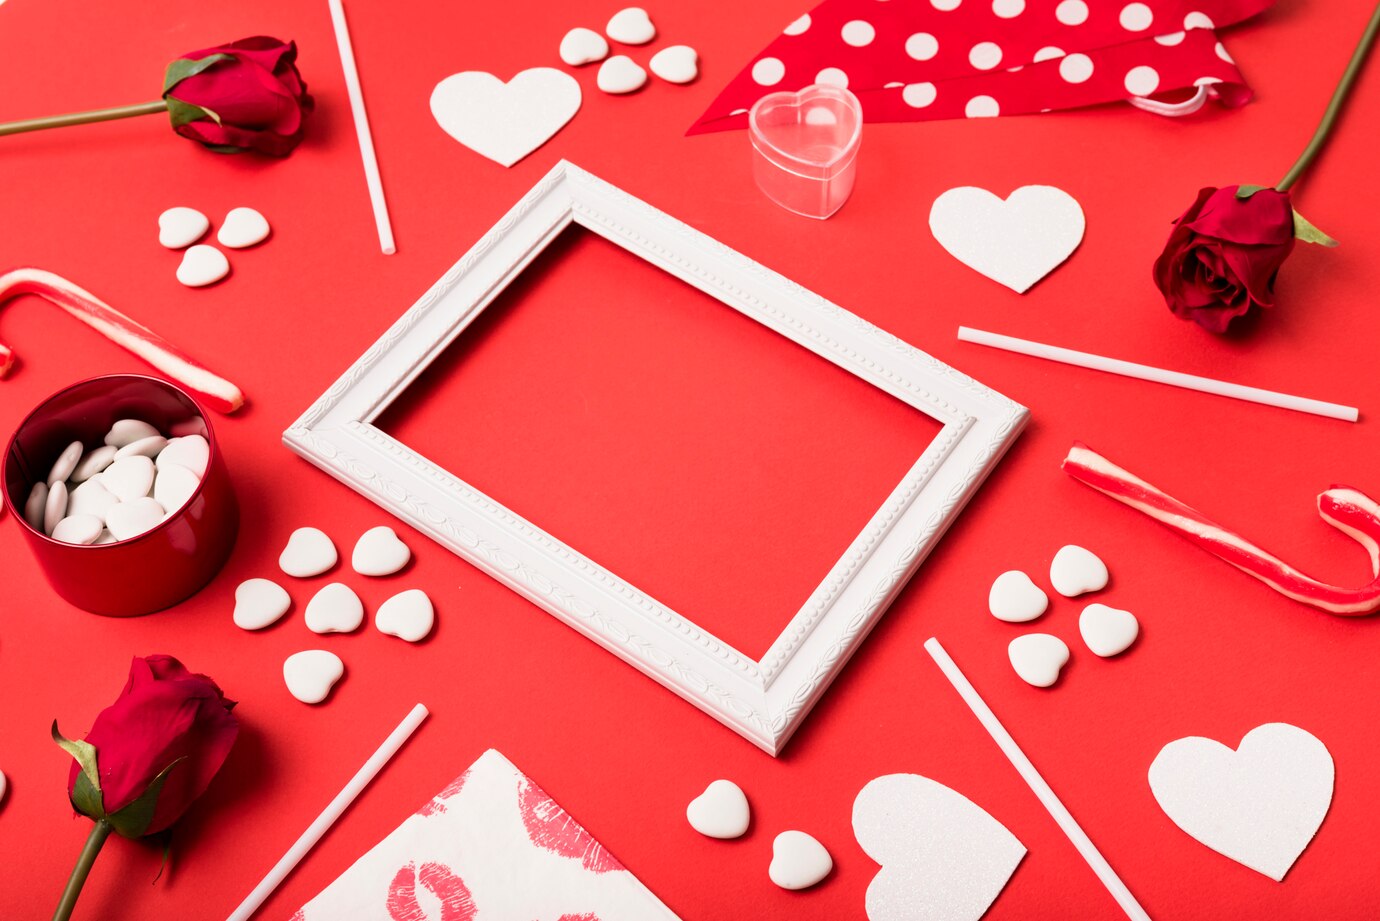 DIY Sentimental Valentine’s Day Gifts For Him 